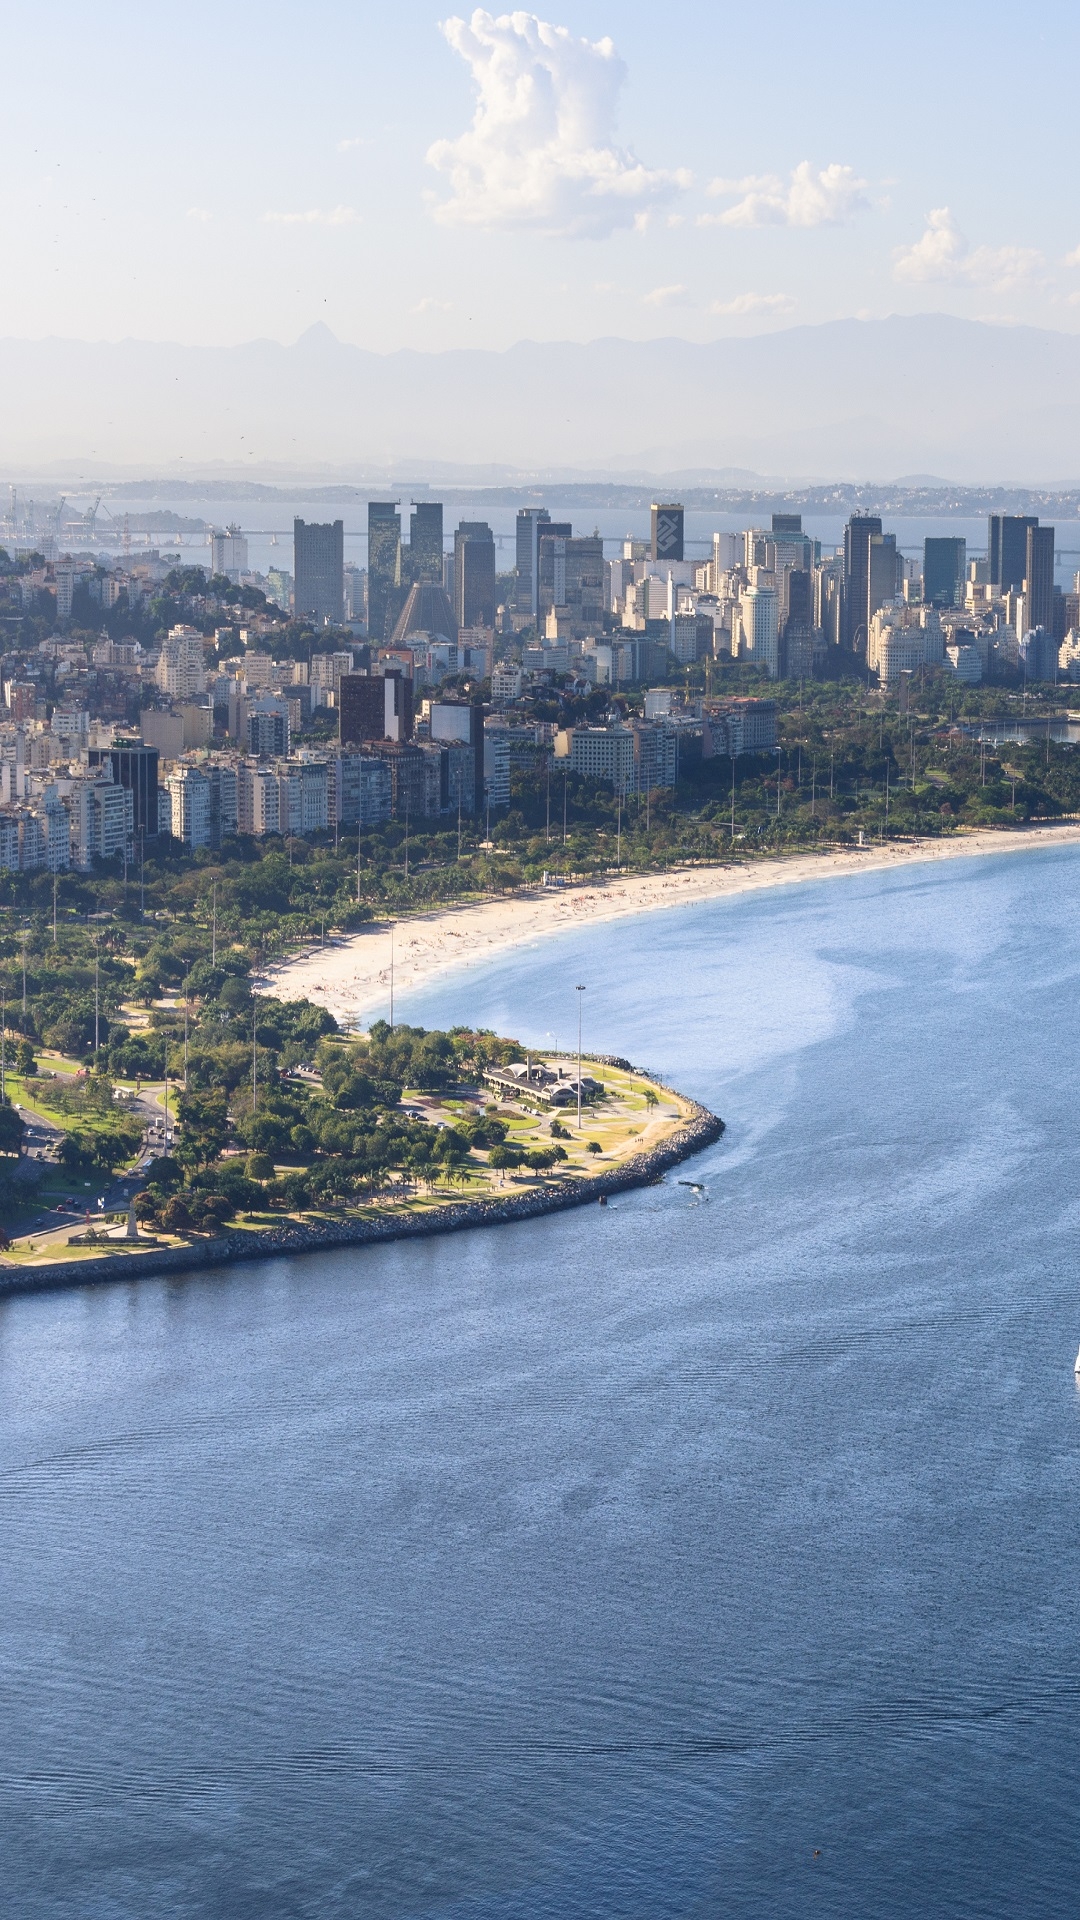 Rio de Janeiro Brazil for Apple iPhone 6S & 7 Plus resolution